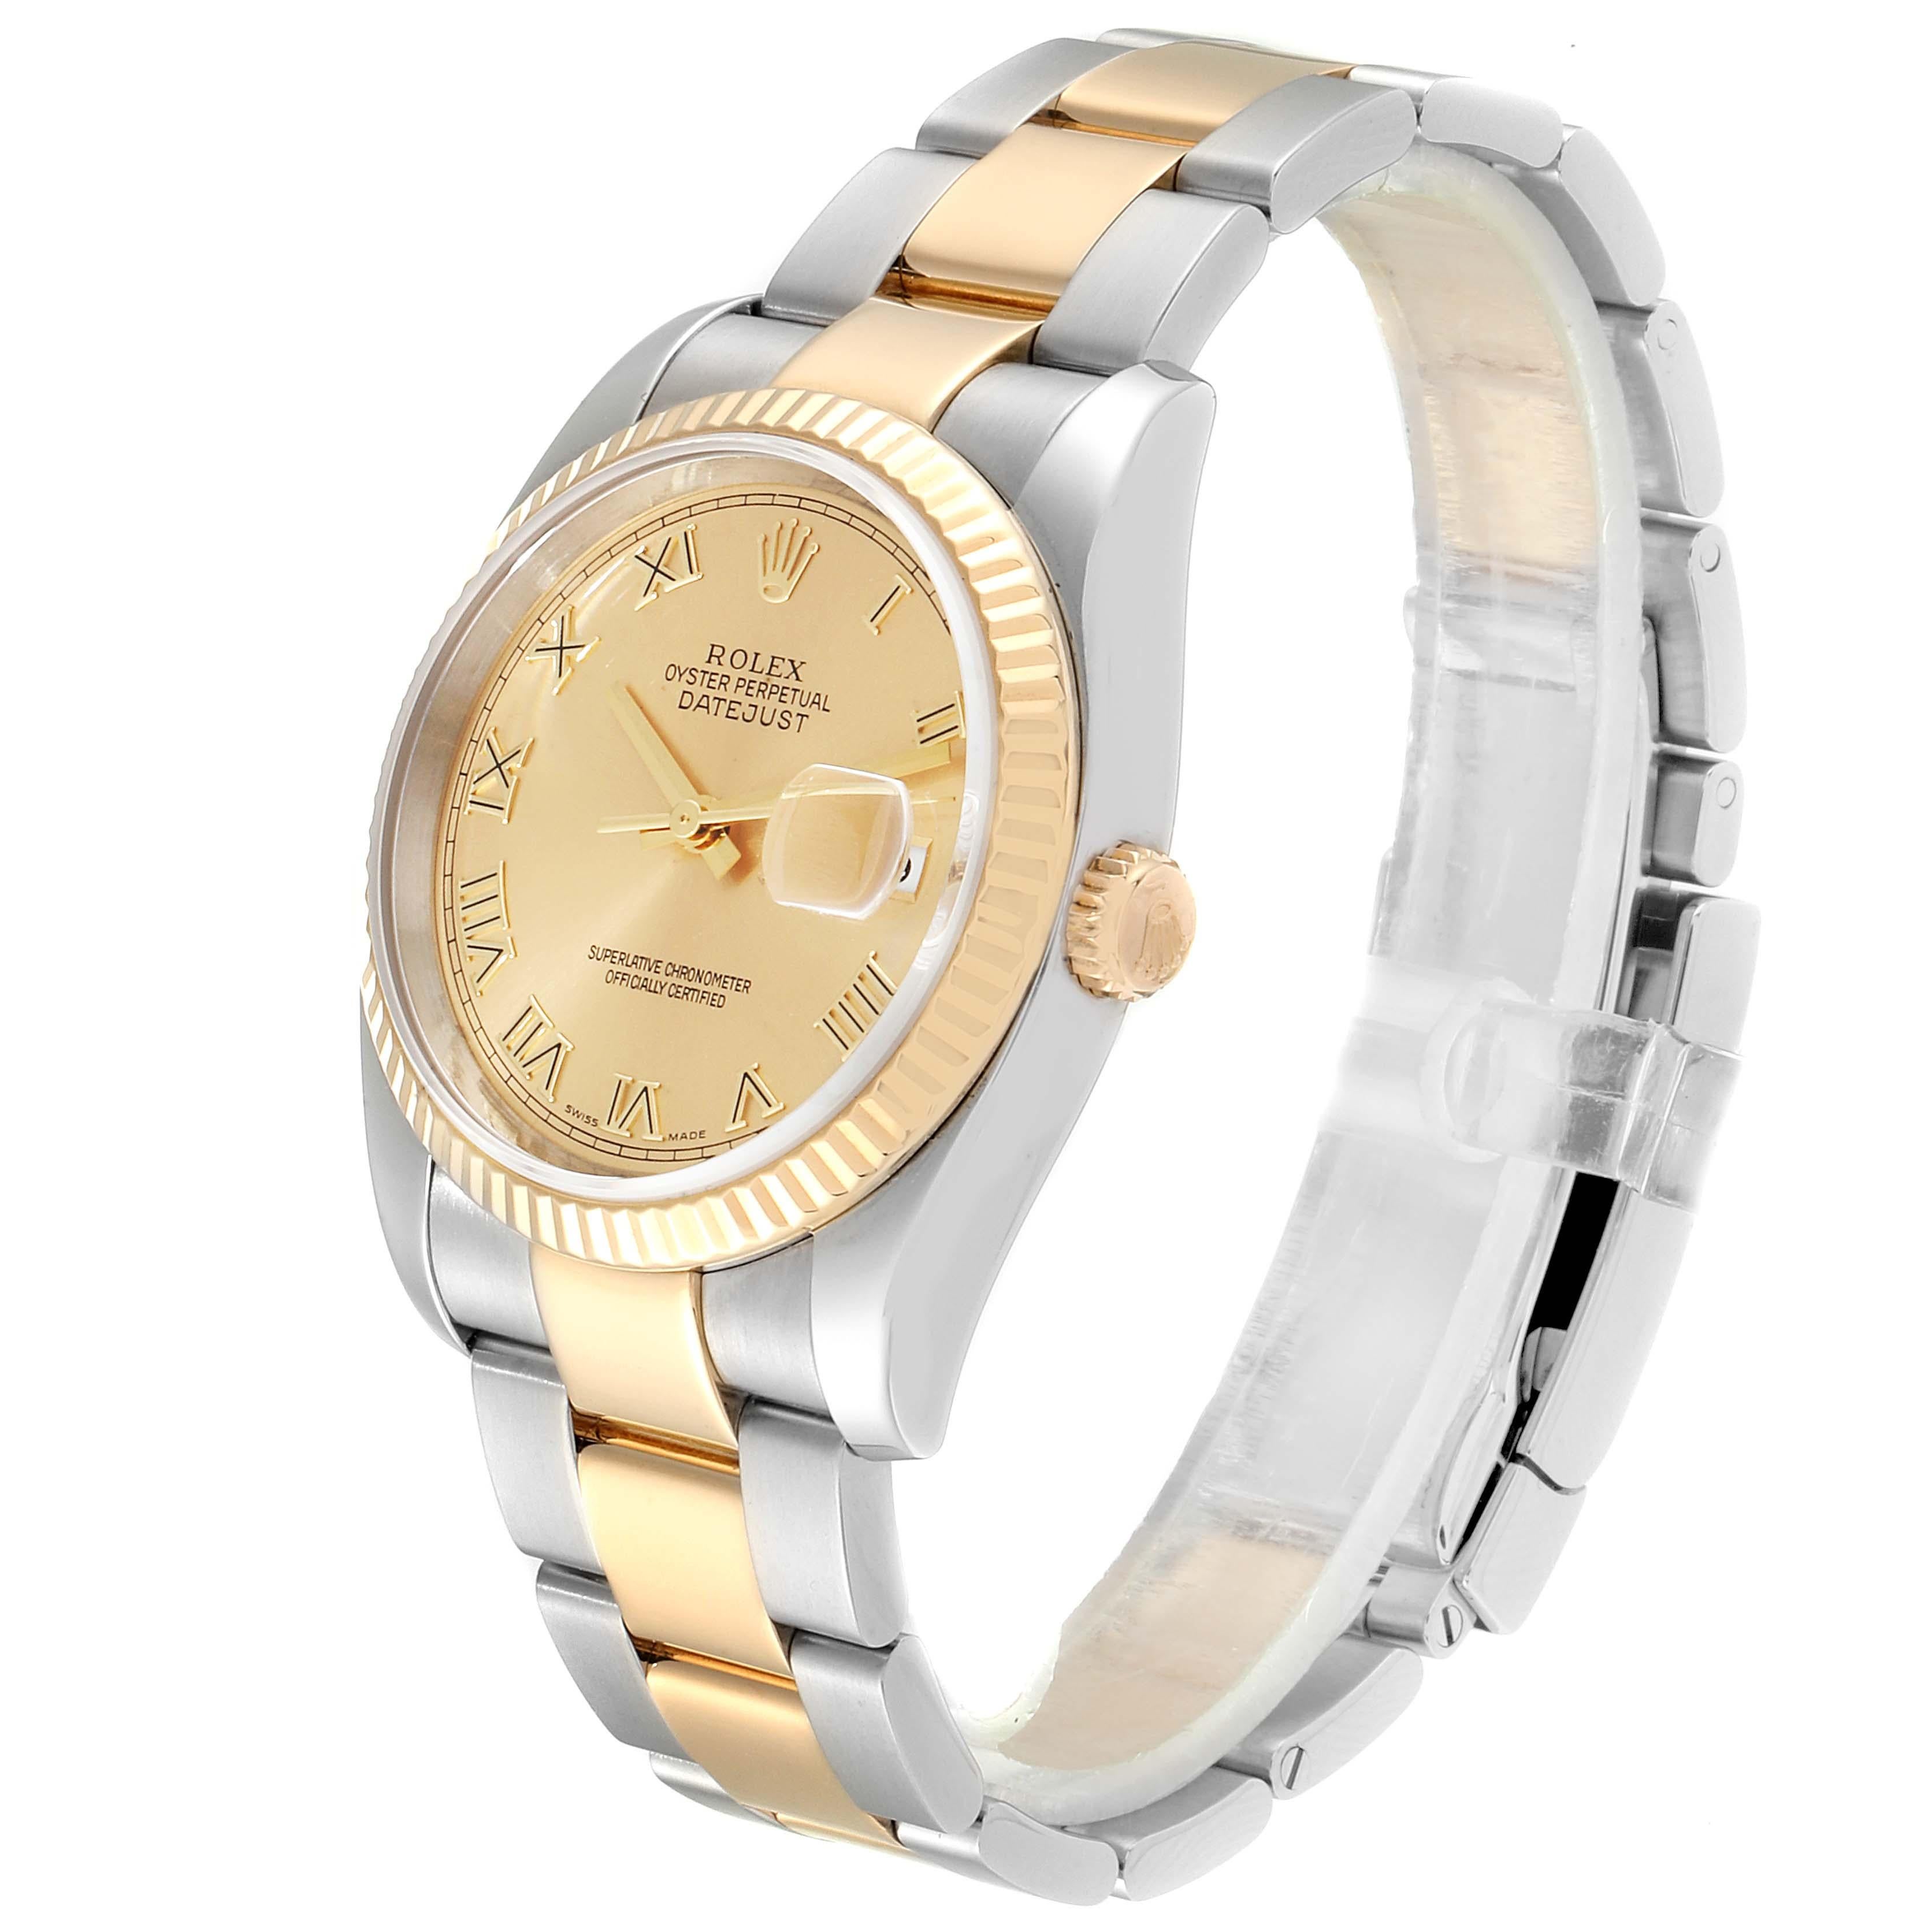 Rolex Datejust Steel Yellow Gold Oyster Bracelet Men's Watch 116233 1